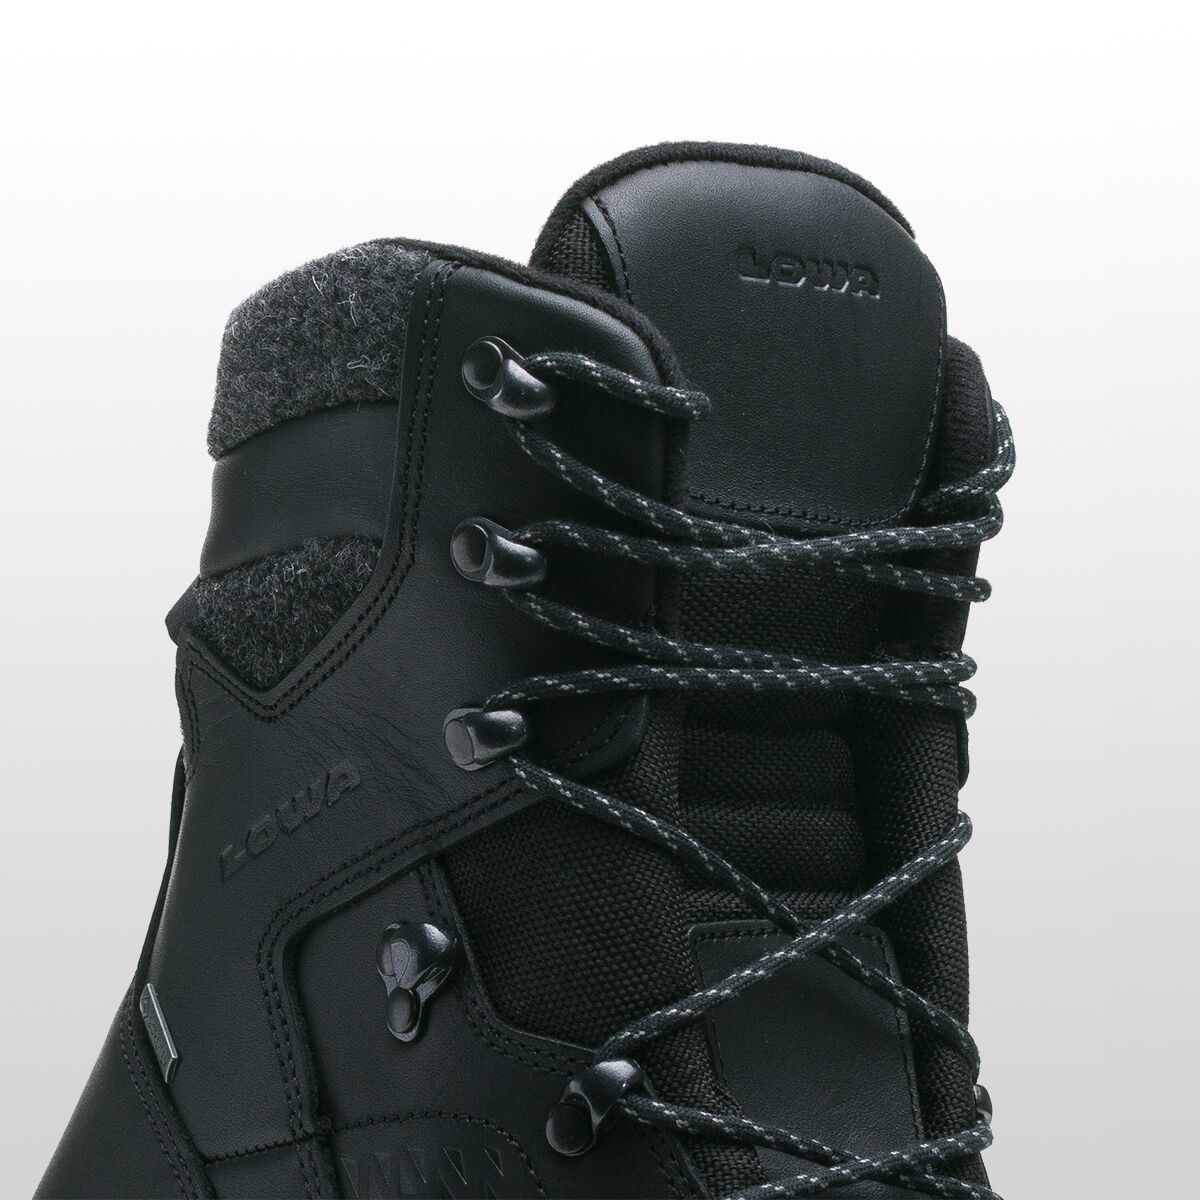 Lowa Renegade Evo Ice GTX Boot - Men's - Footwear